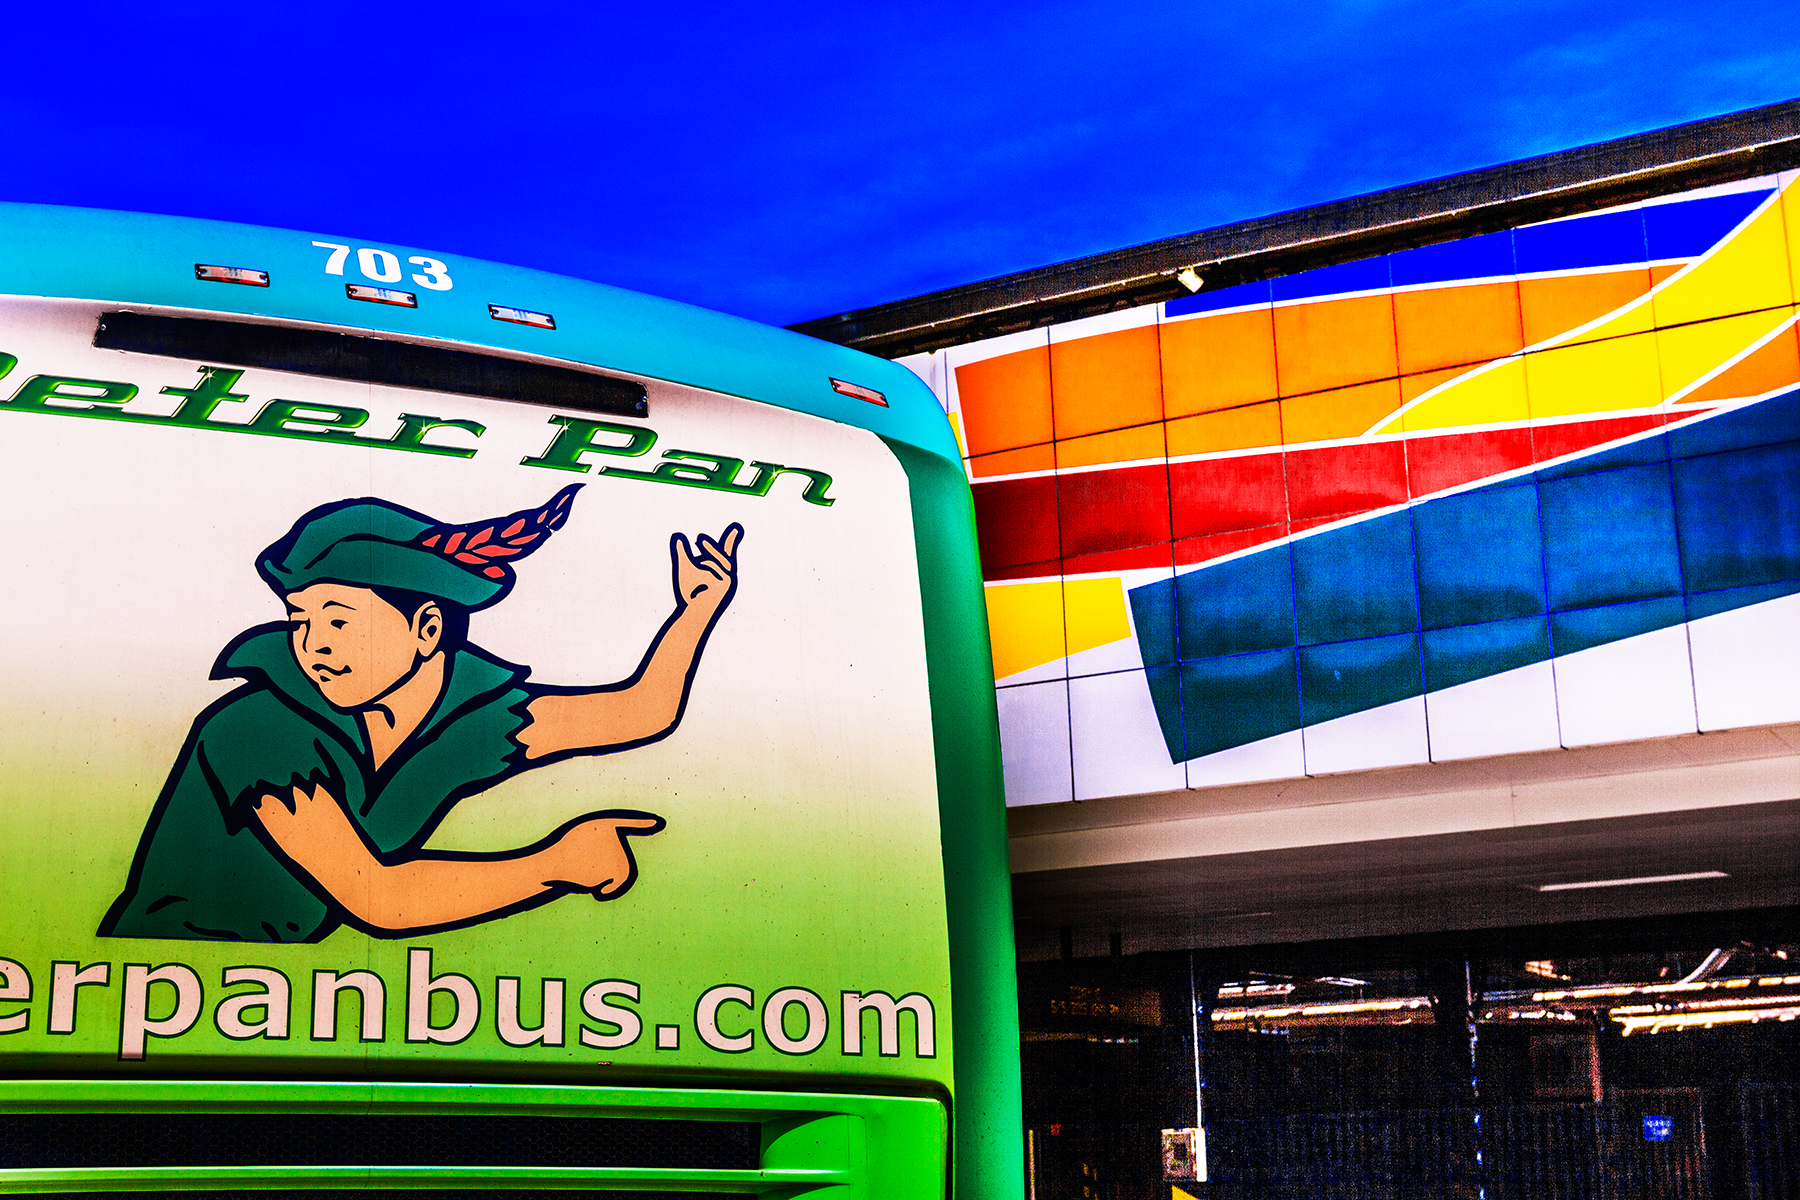 Peter Pan bus at RR Station